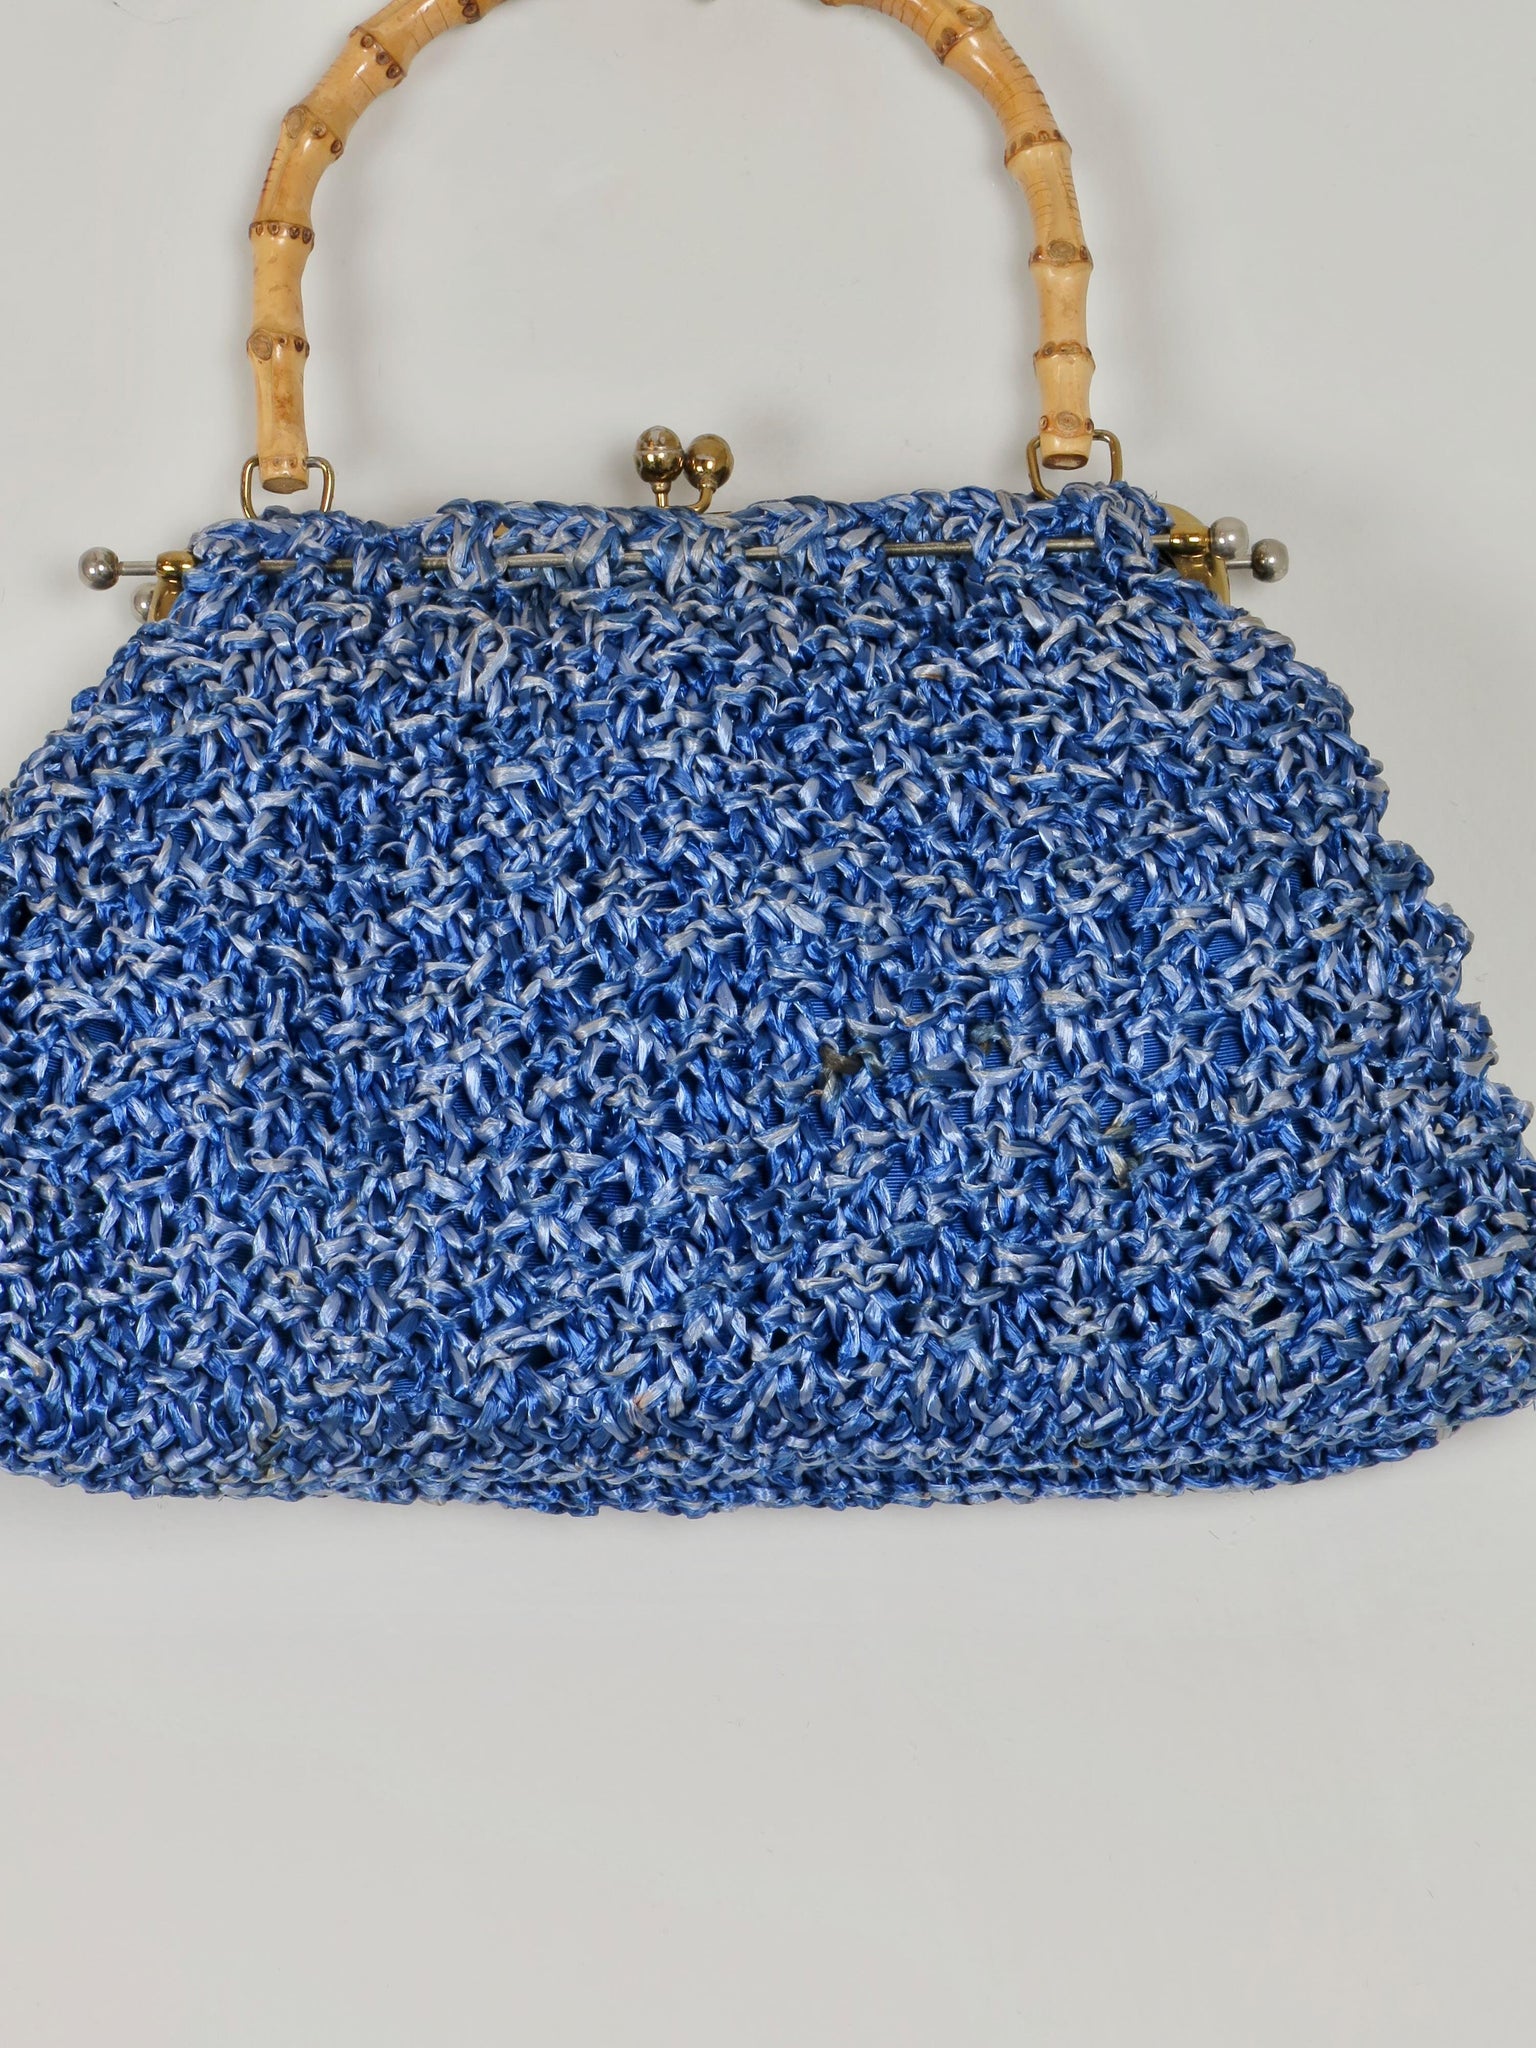 Blue Vintage Straw Handbag 1950s - The Harlequin